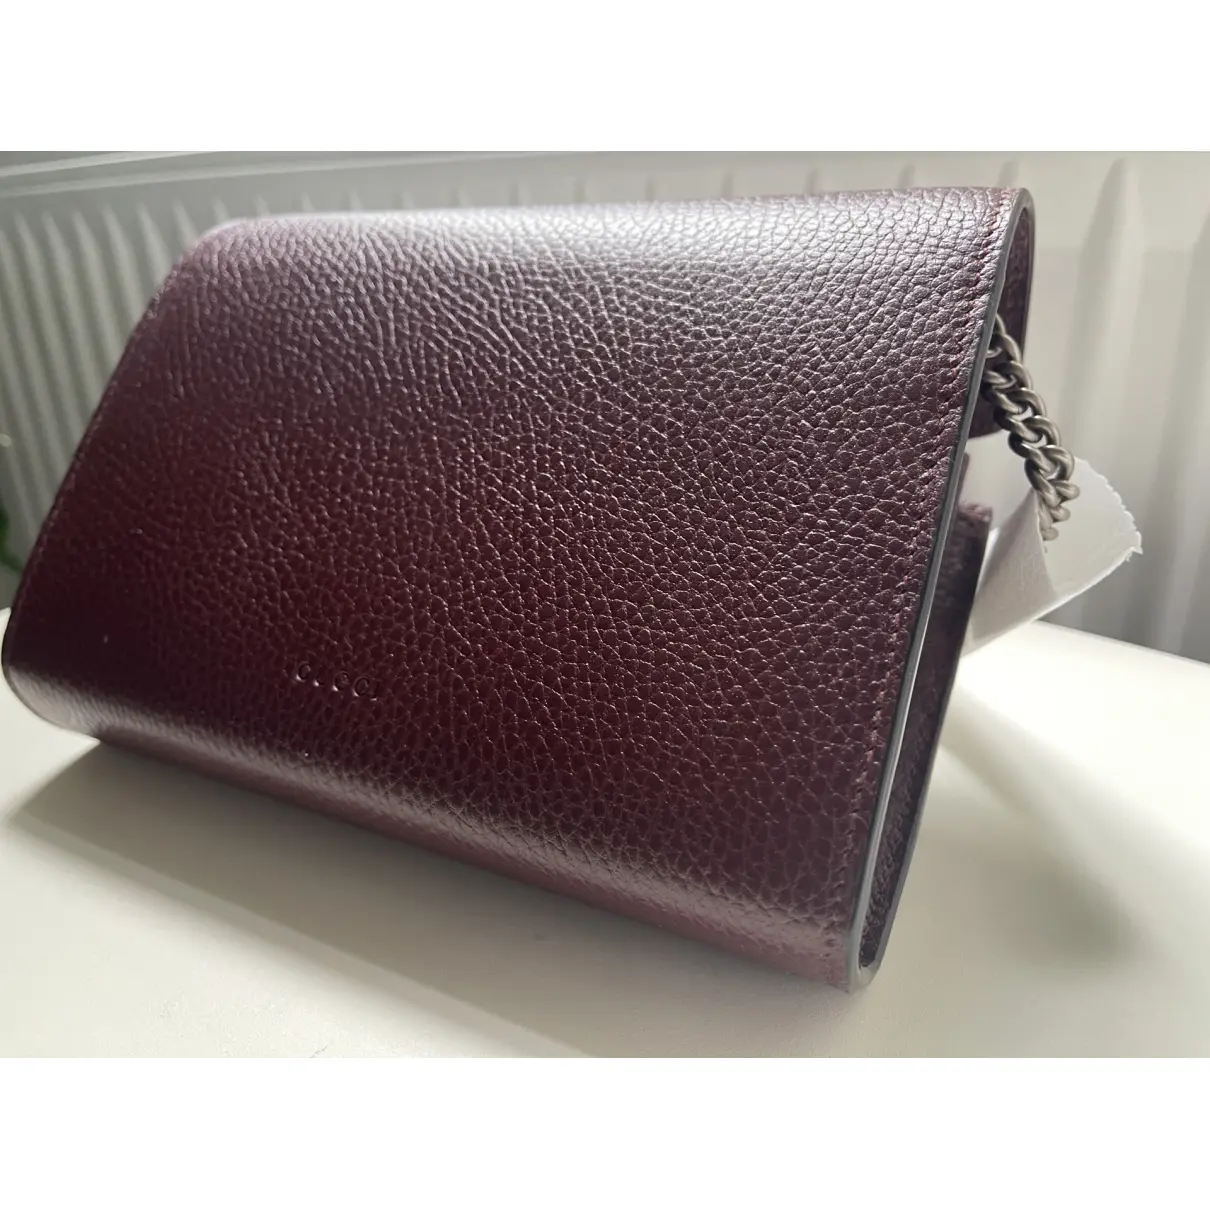 Buy Gucci Dionysus leather handbag online